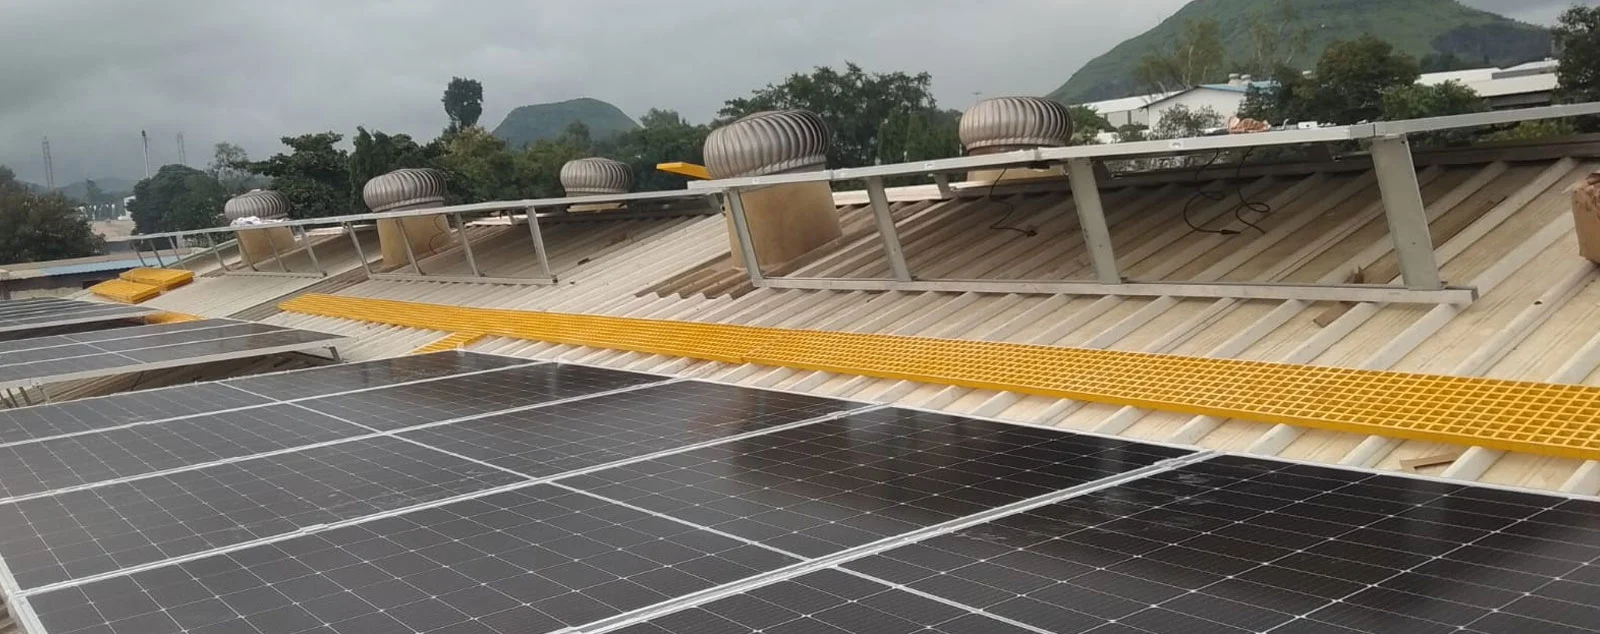 Accelerating Distributed Renewable Energy - Mahindra Solarize